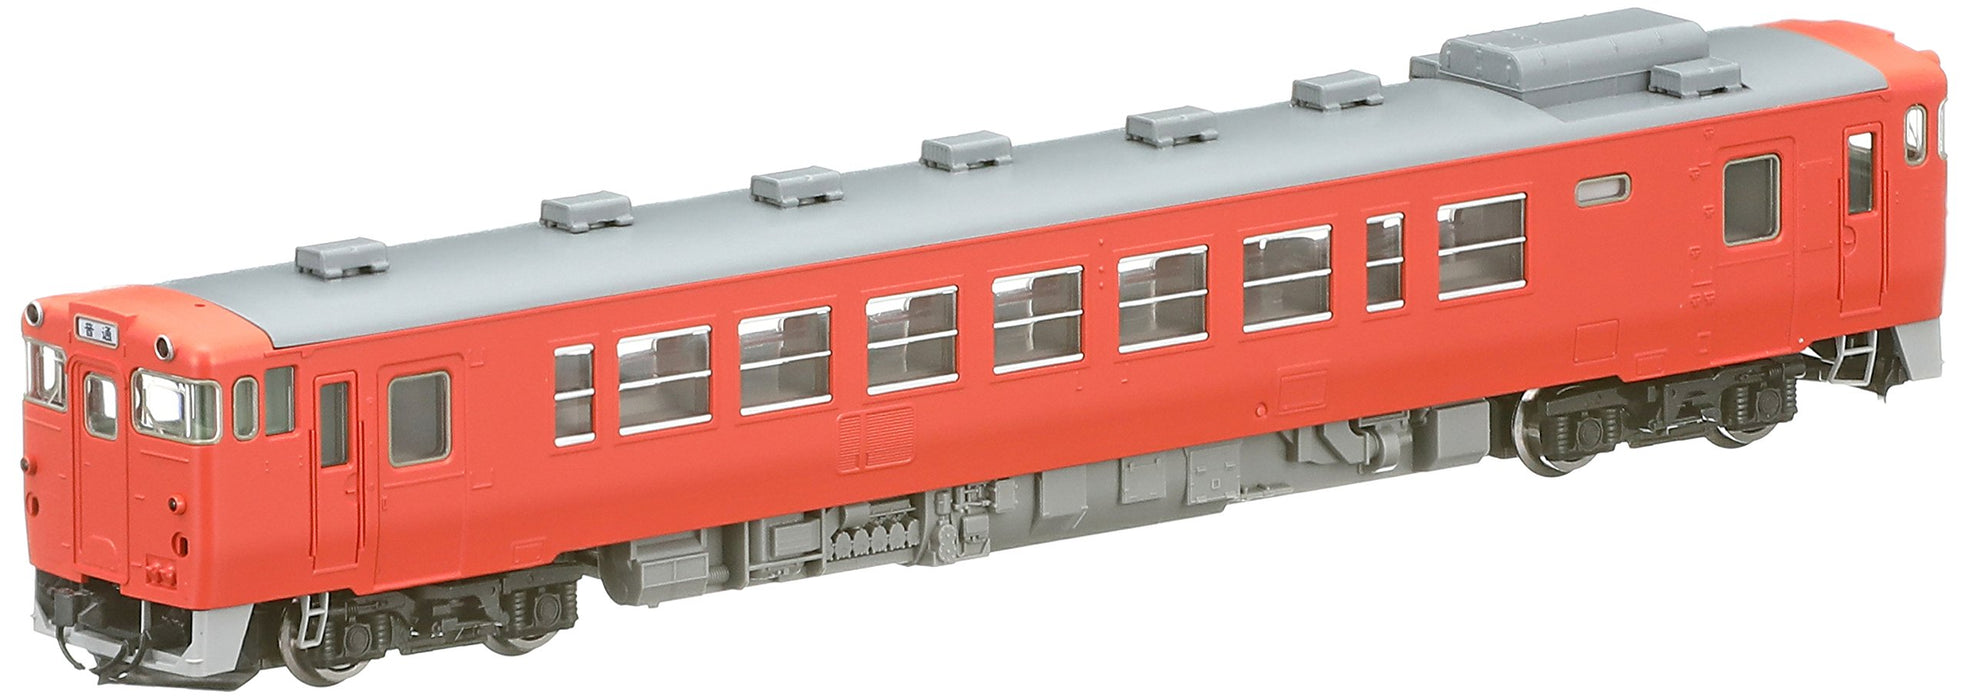 Tomytec Tomix Kiha 40-500 M 8403 Voiture diesel : modèle ferroviaire à voie N